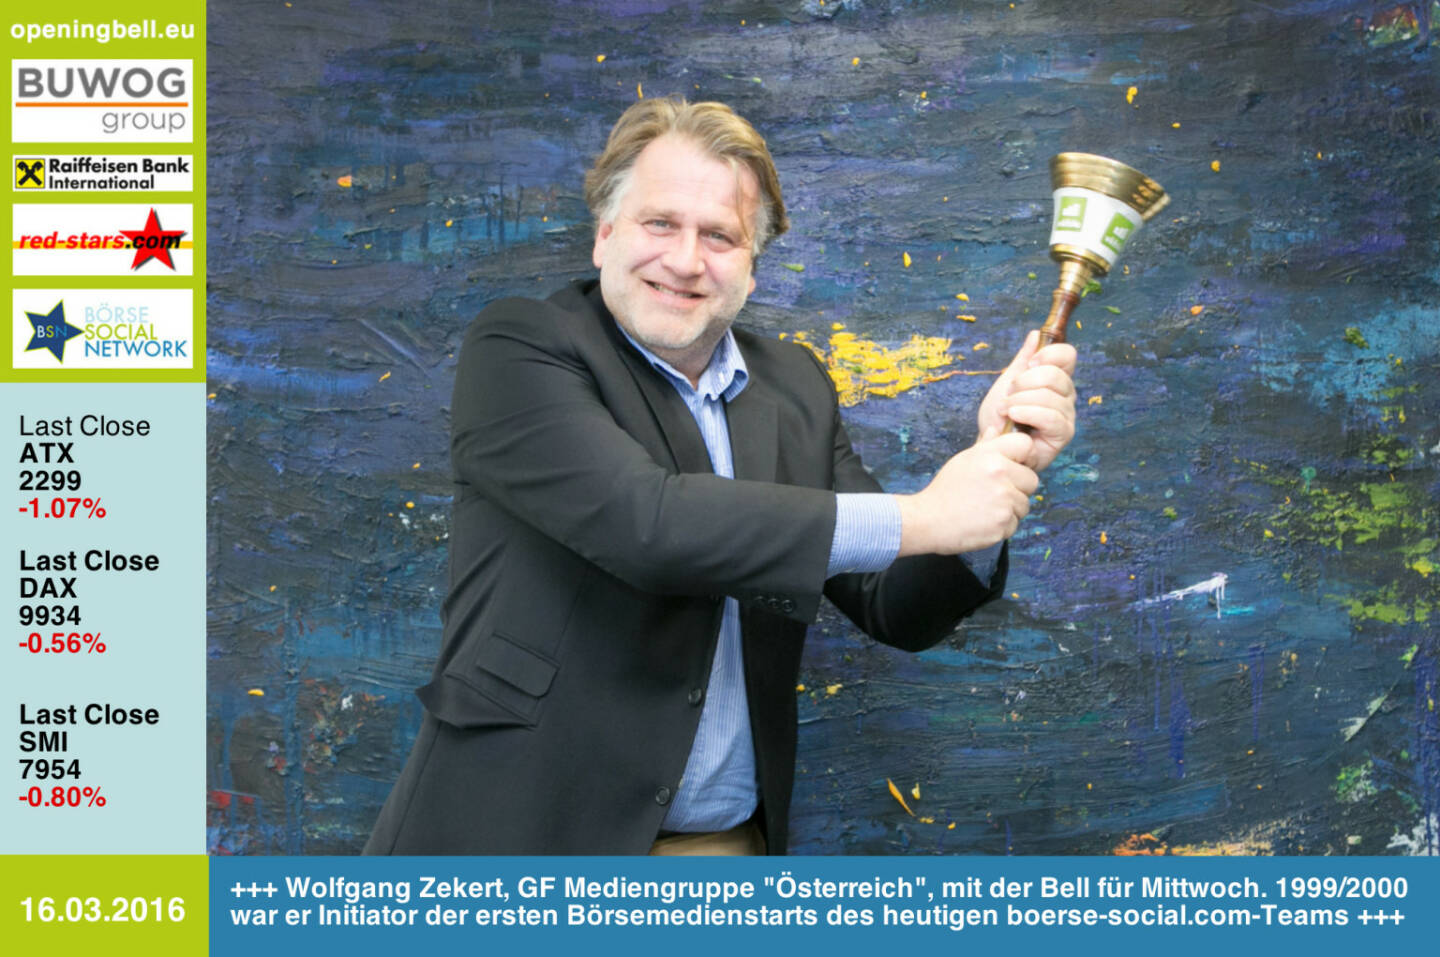 #openingbell am 16.3: Wolfgang Zekert, Geschäftsführer Mediengruppe Österreich, mit der Opening Bell für Mittwoch. 1999/2000 war er Initiator der ersten Börsemedienstarts des heutigen boerse-social.com-Teams http://www.oe24.at http://www.openingbell.eu